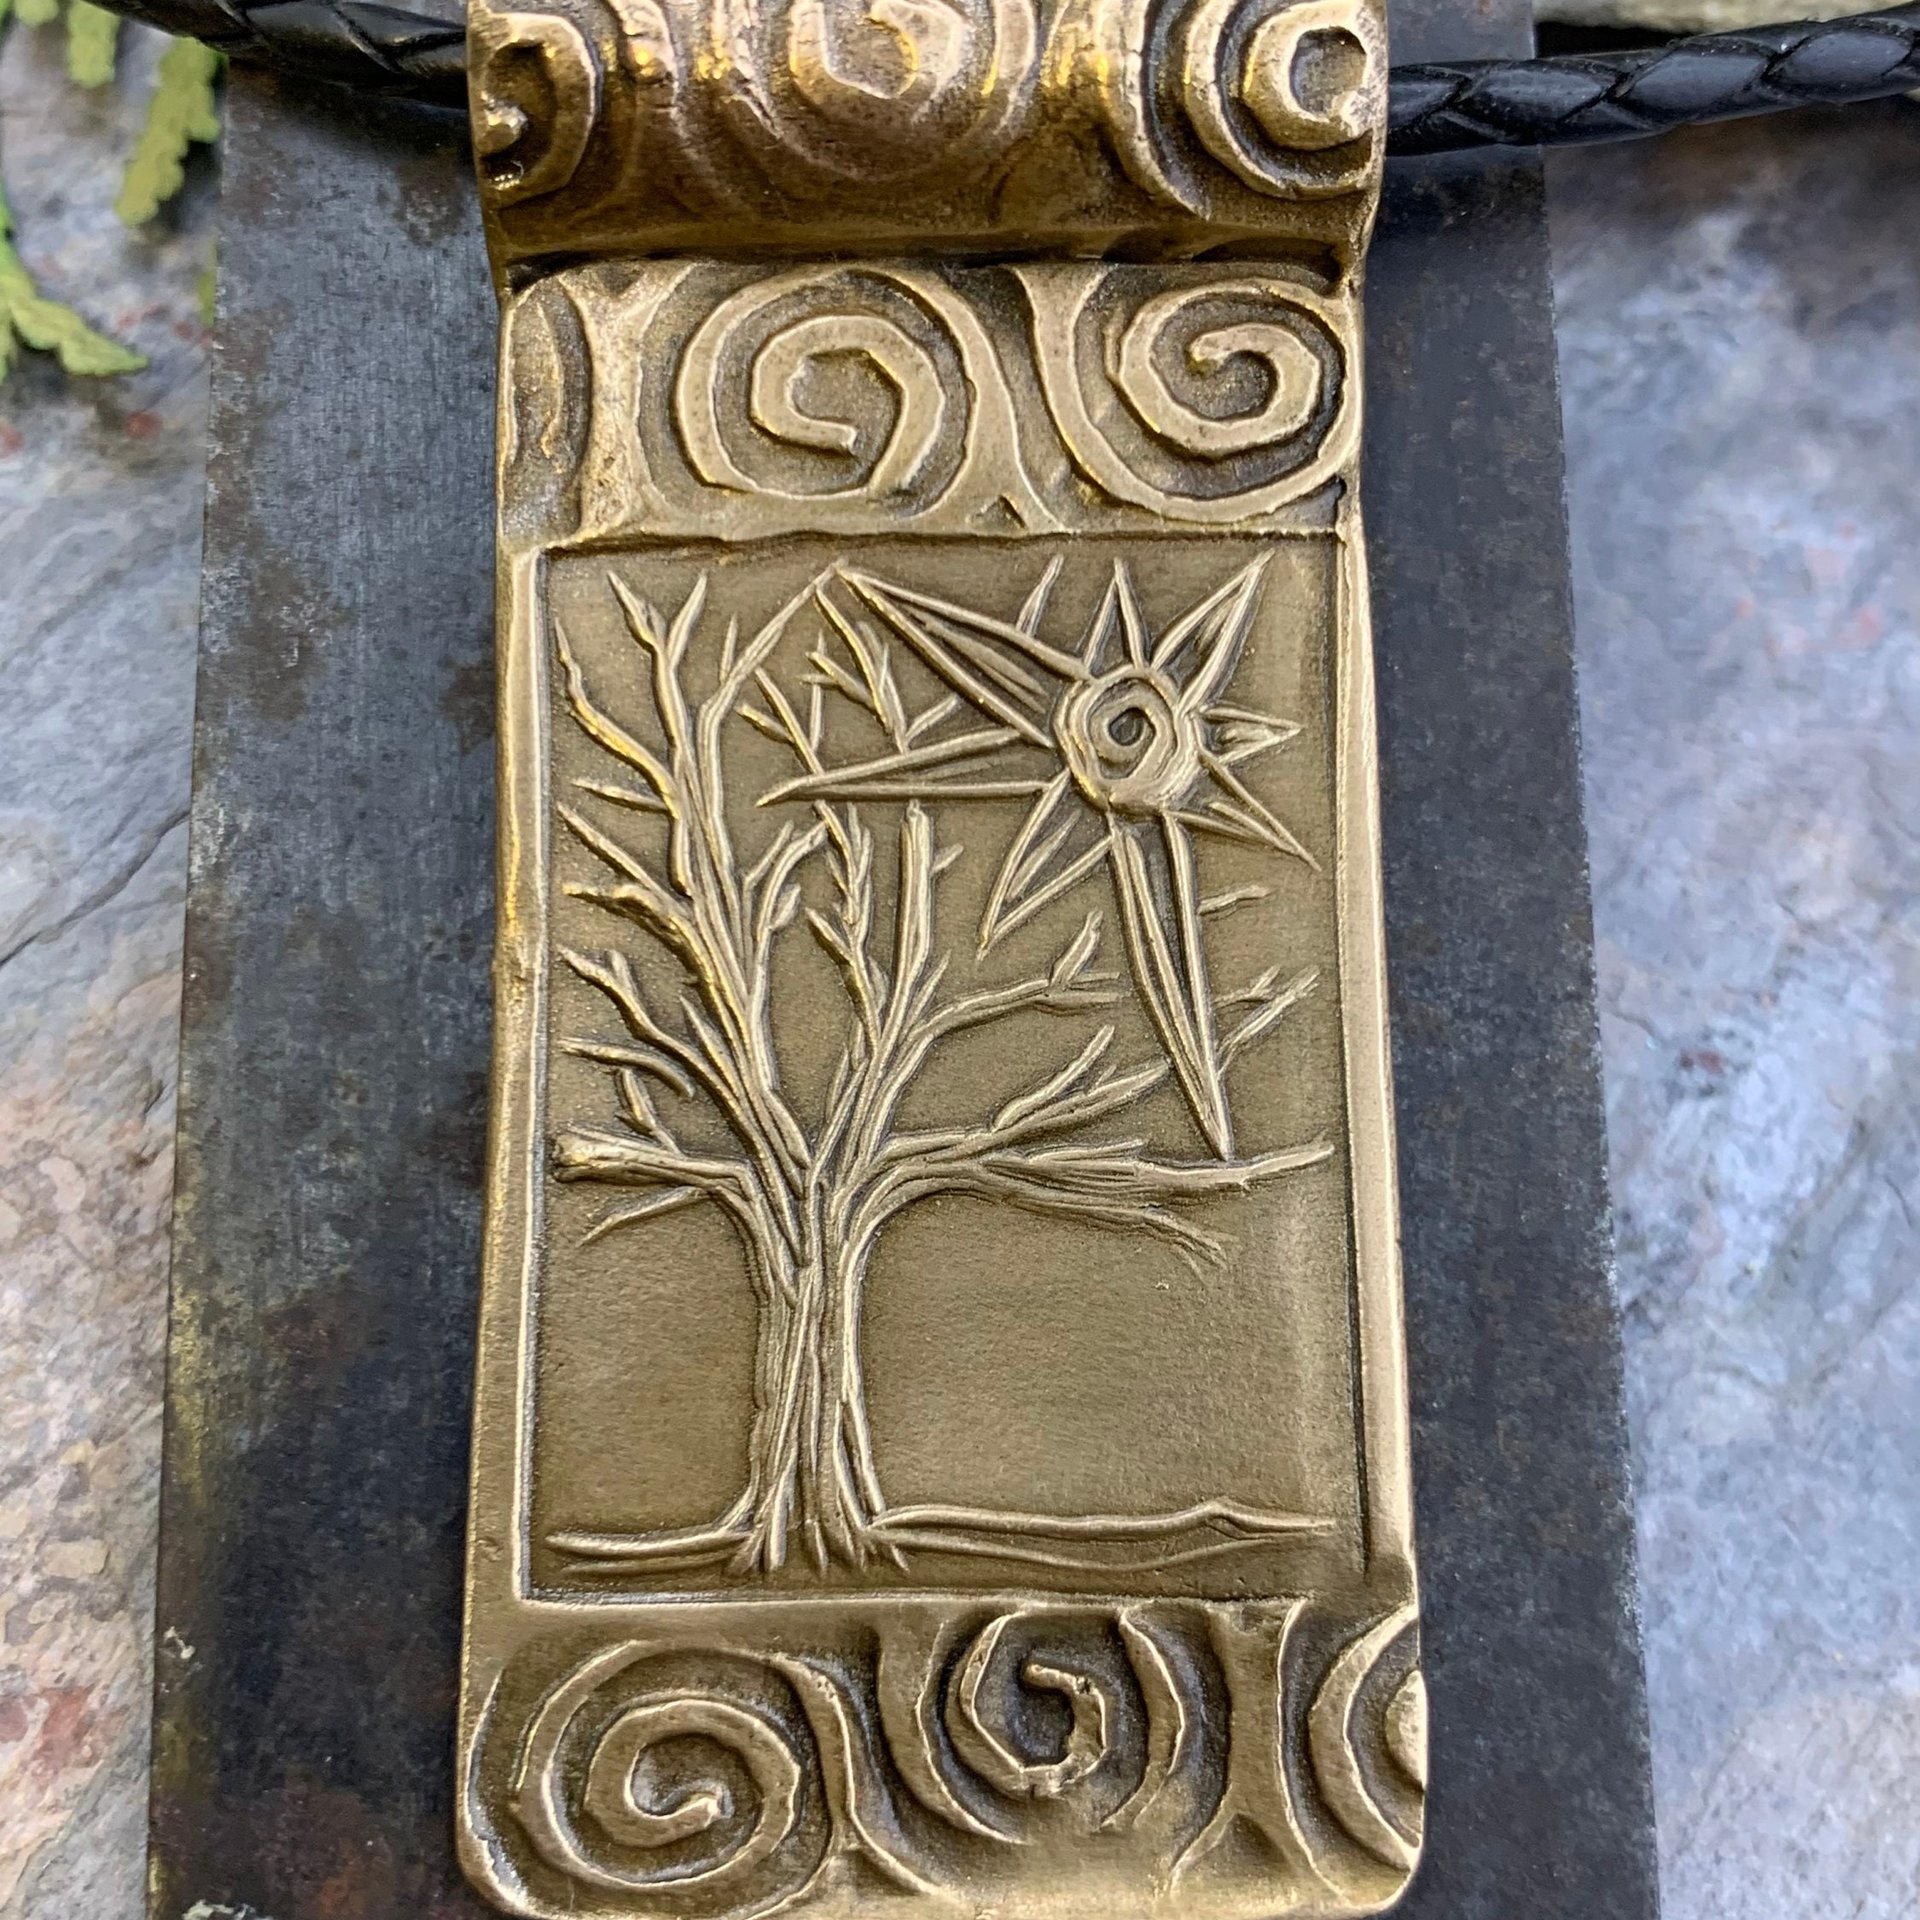 Celtic Tree of Life, Bronze Tree Sun Pendant, Irish Celtic Spirals, Hand Carved, Leather & Vegan Cords, Druid Pagan, Handmade Art Jewelry